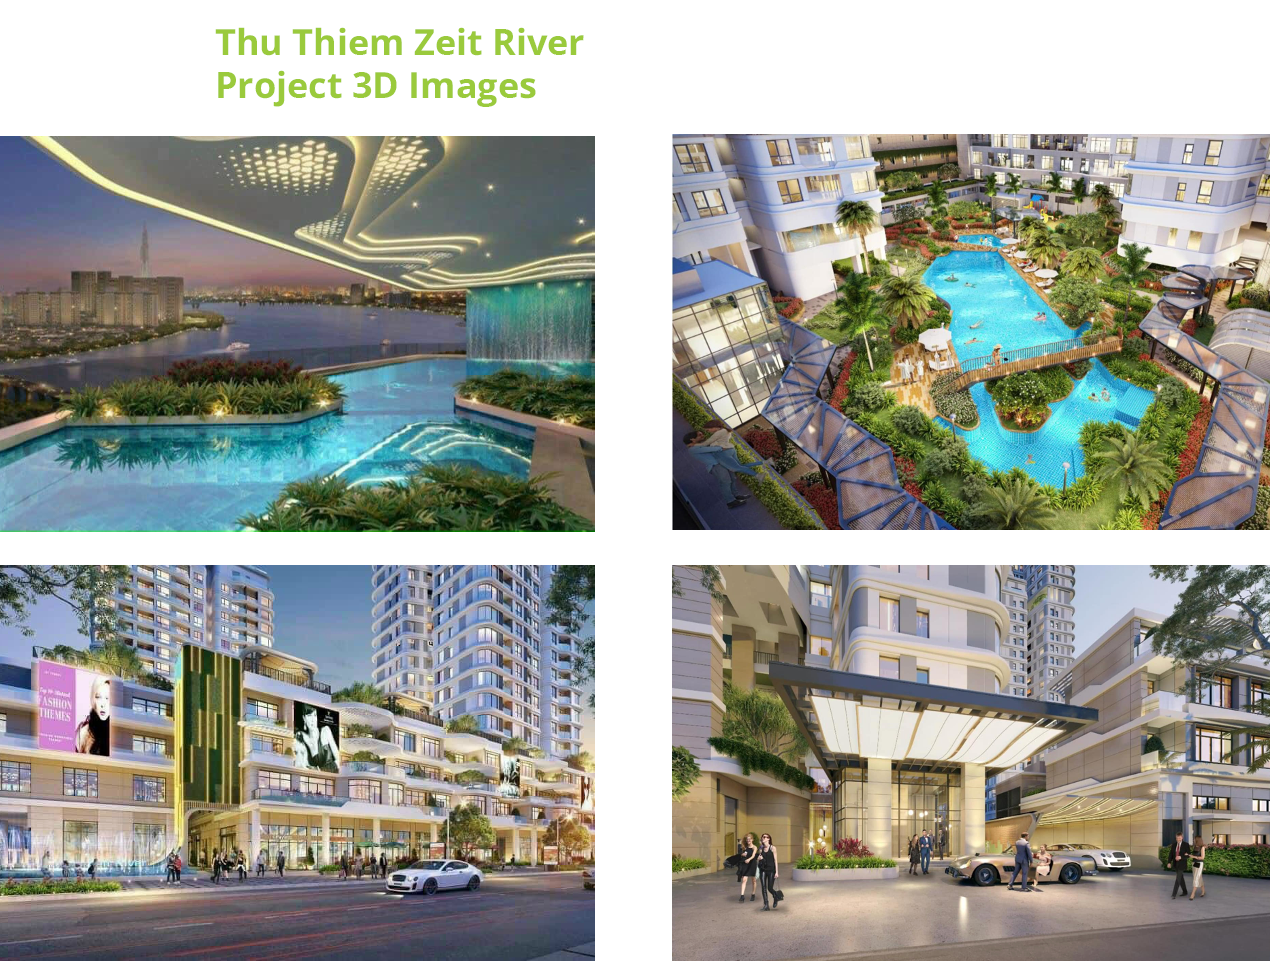 Perspective photos of Thu Thiem Zeit River